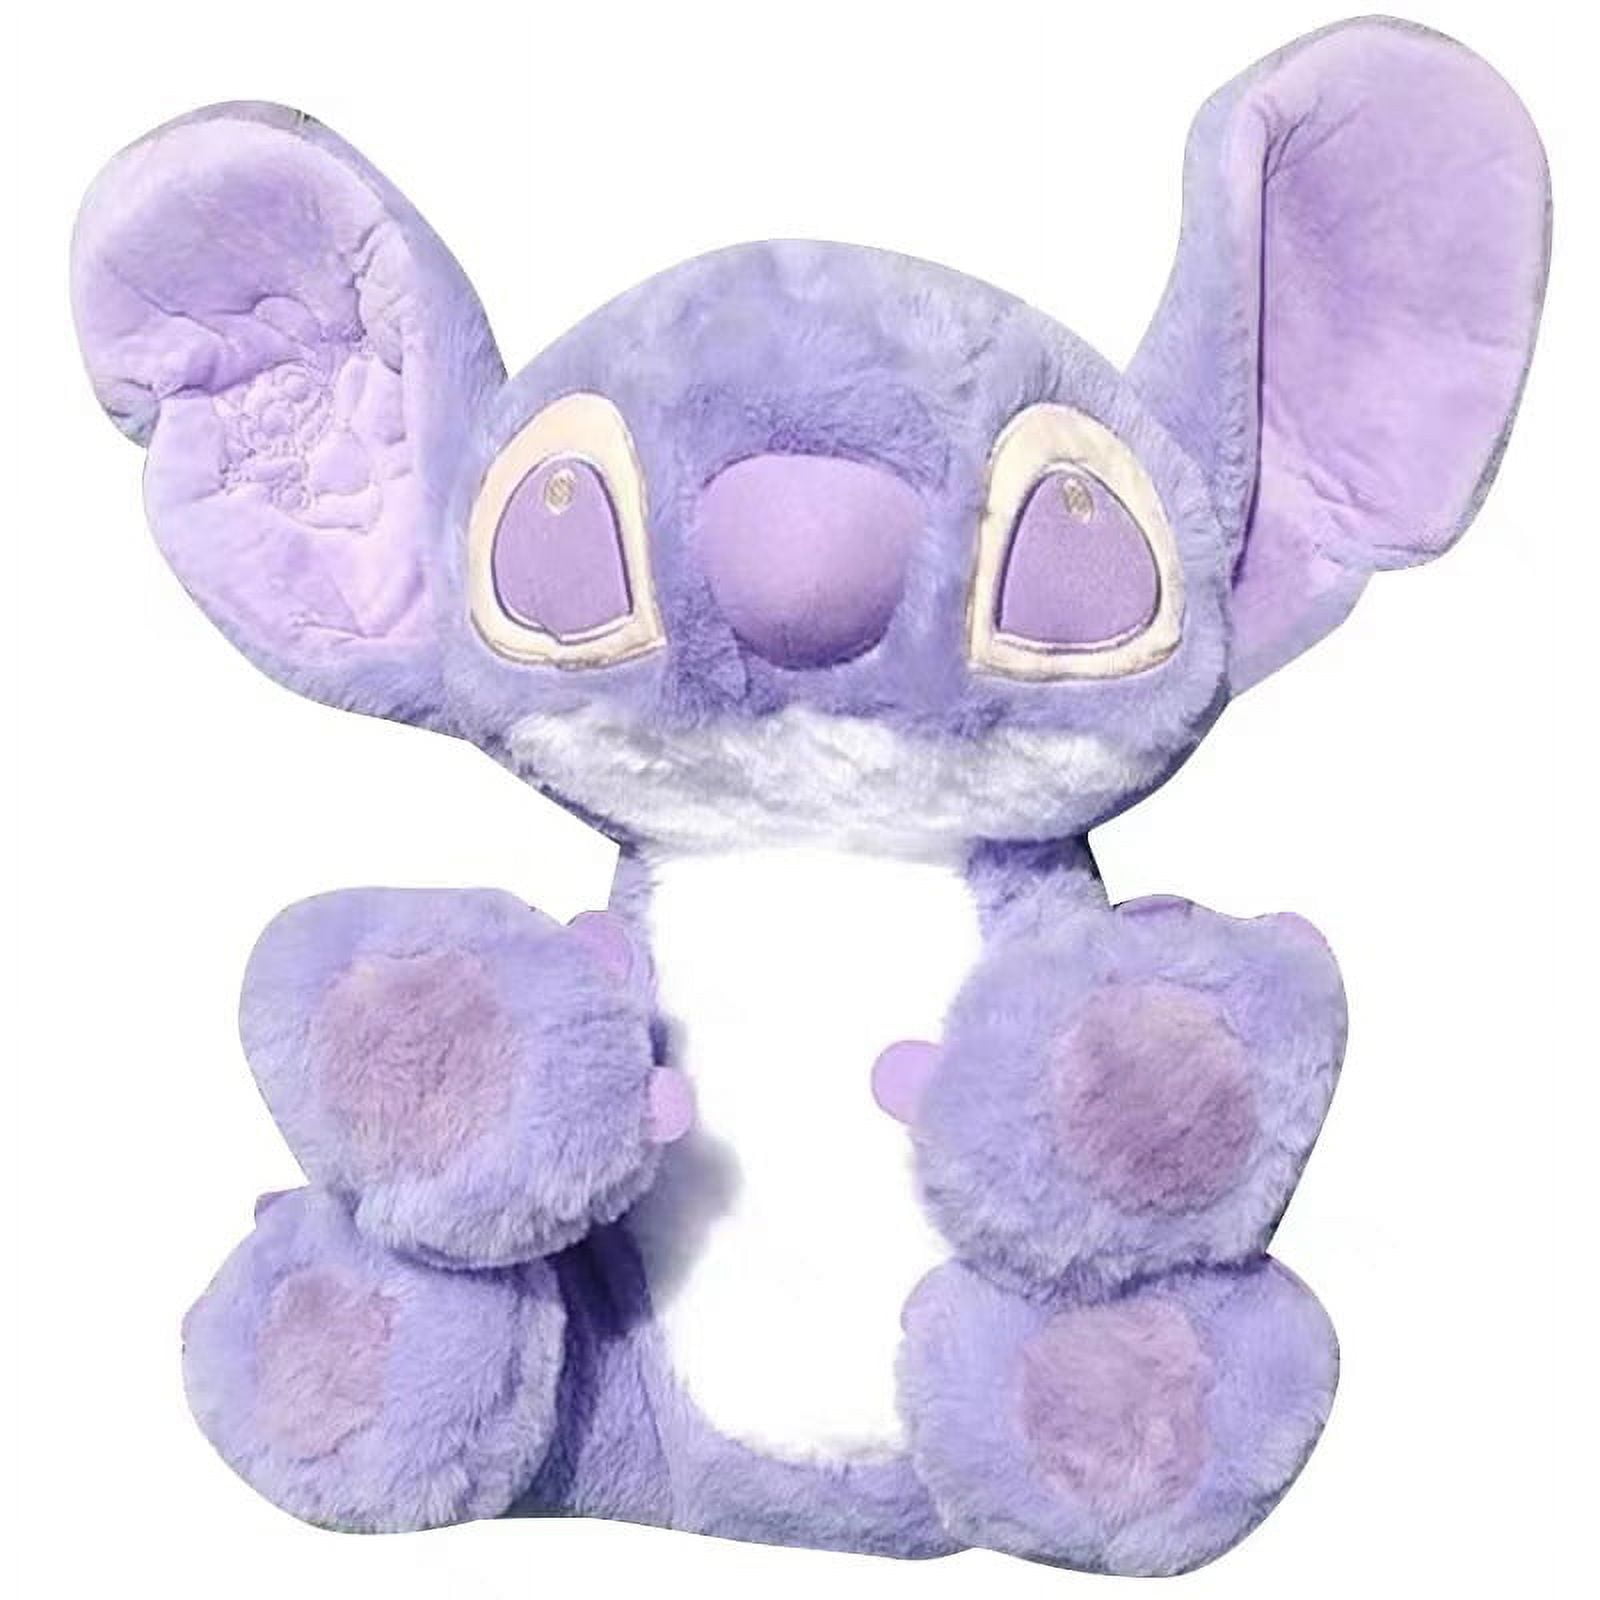 Stitch Plush Toys, 11.8 inch Purple Lilo & Stitch Stuffed Dolls